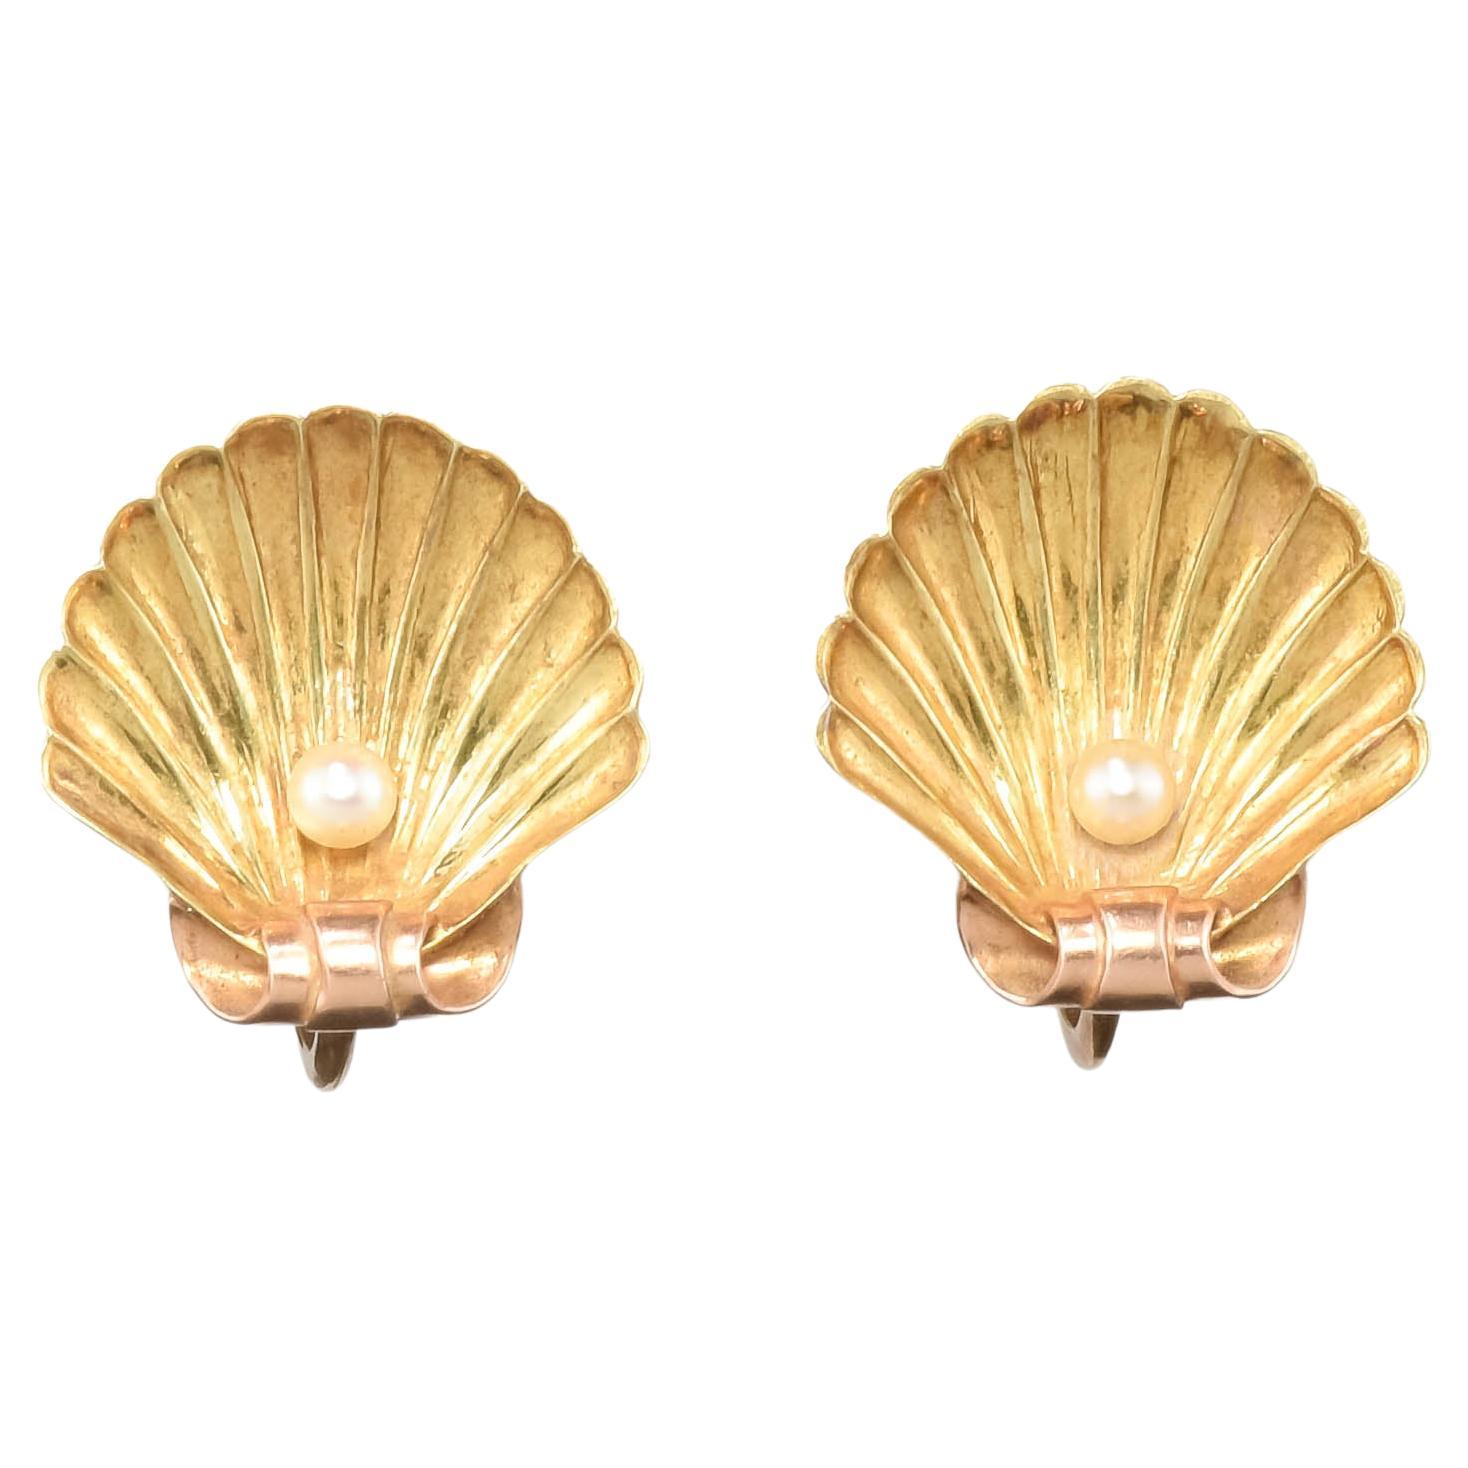 Antique 14K Gold Shell Earrings w Pearls by Sloan & Co. French Screw Back Style